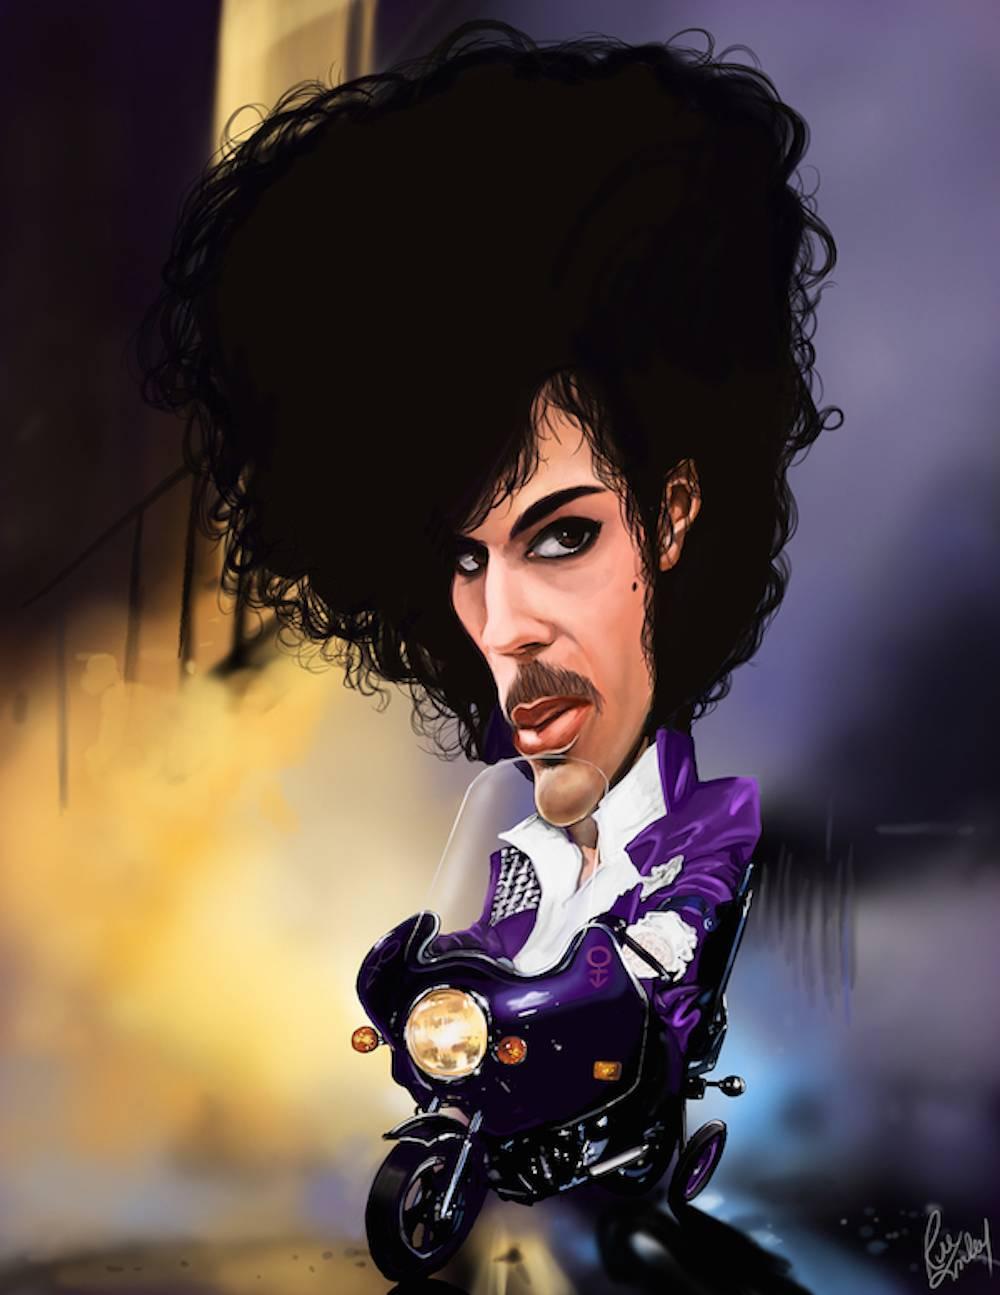 Rich Conley Portrait Print - Prince Purple Rain 9 x 12 Limited Edition on Canvas